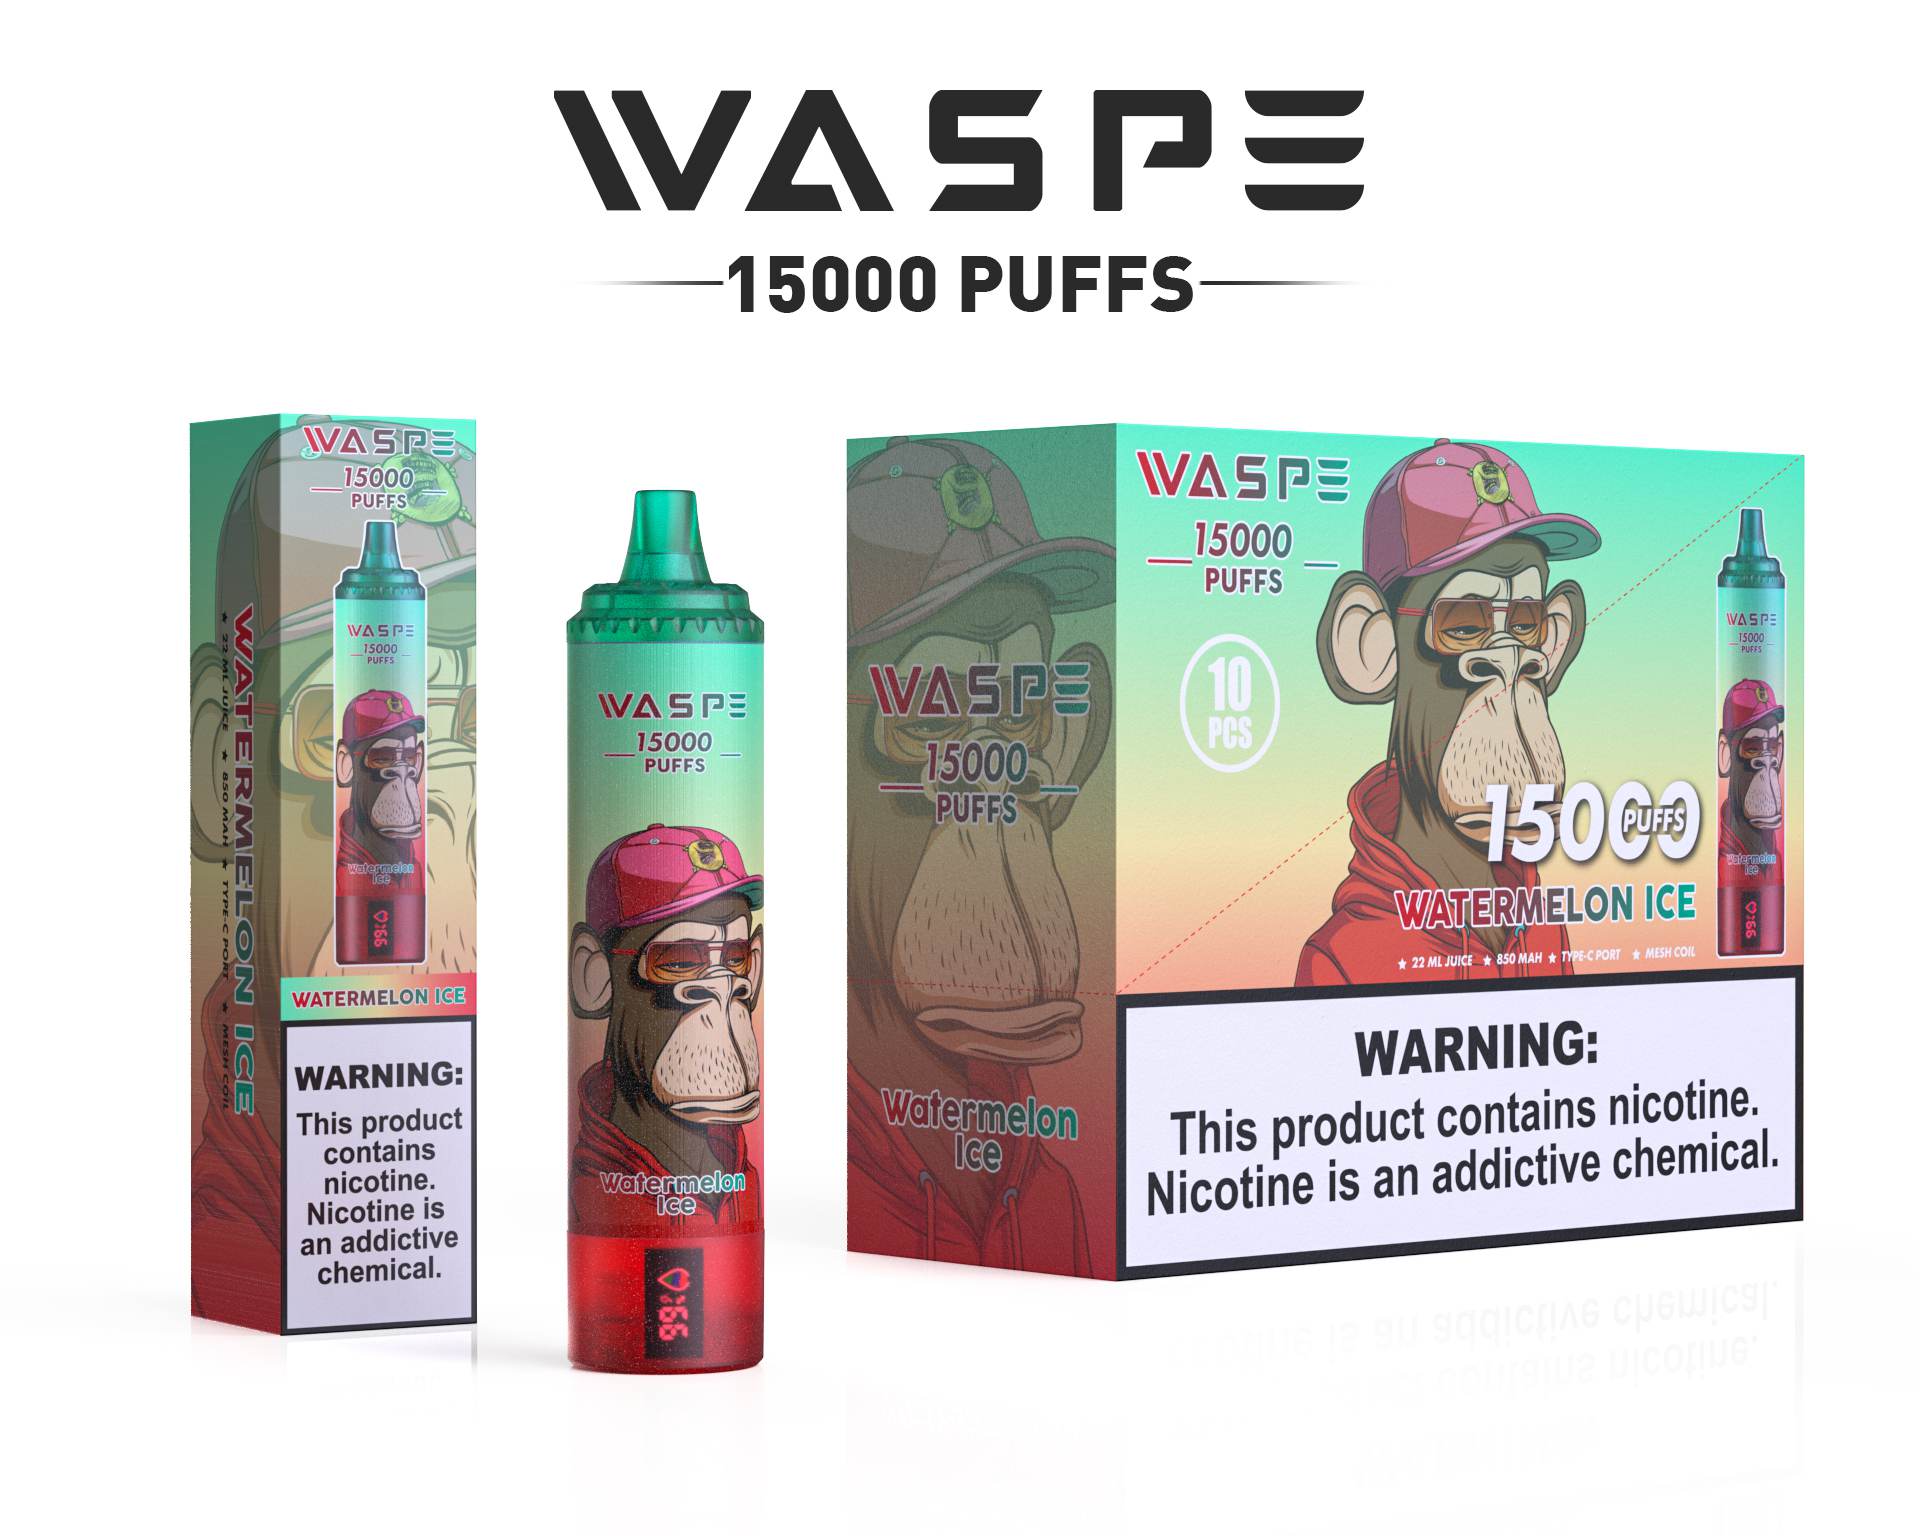 Waspe 15k puff